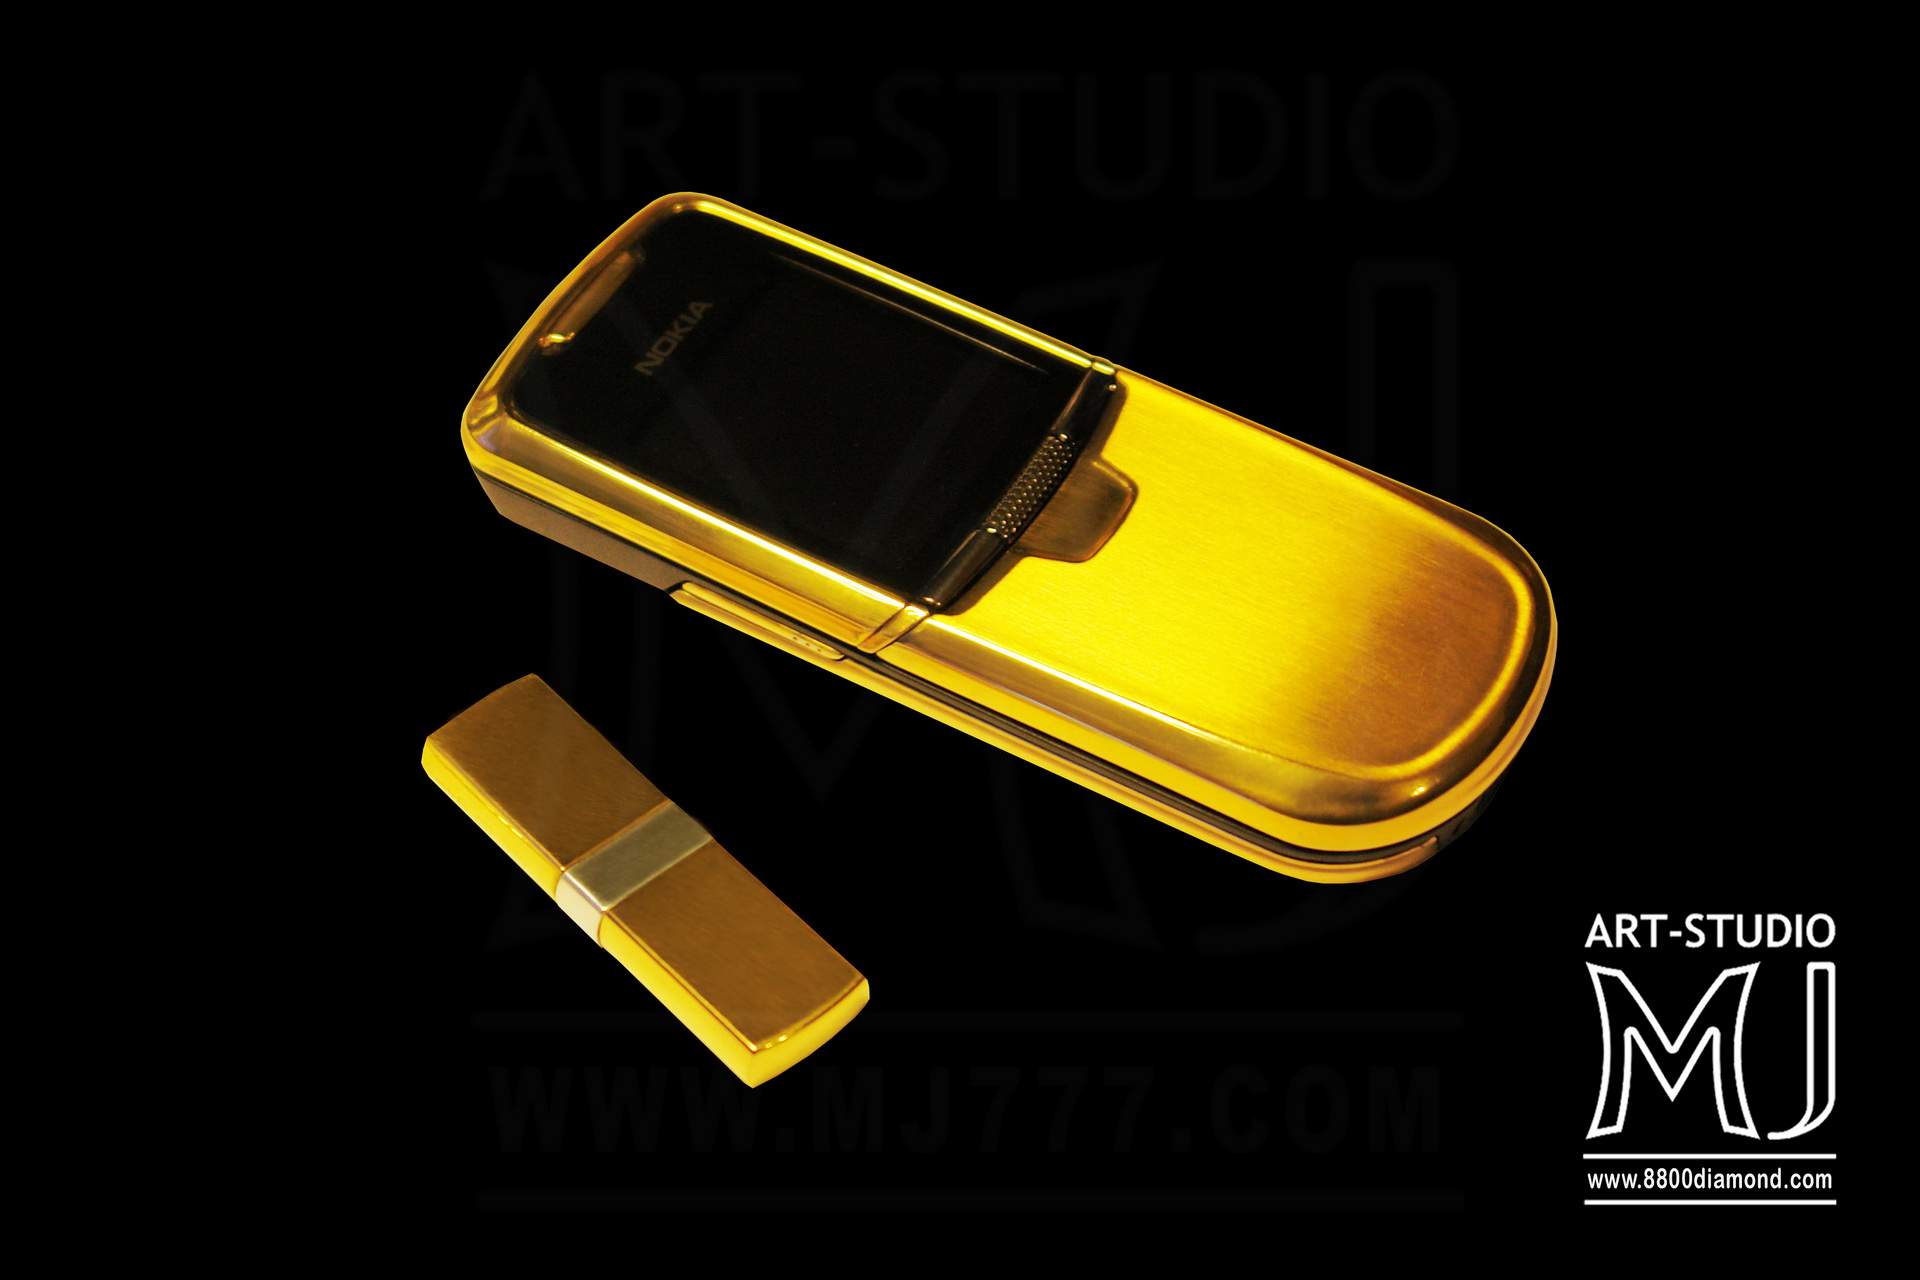 ARTSTUDIO MJ Jewelry work luxury items made of precious metals and